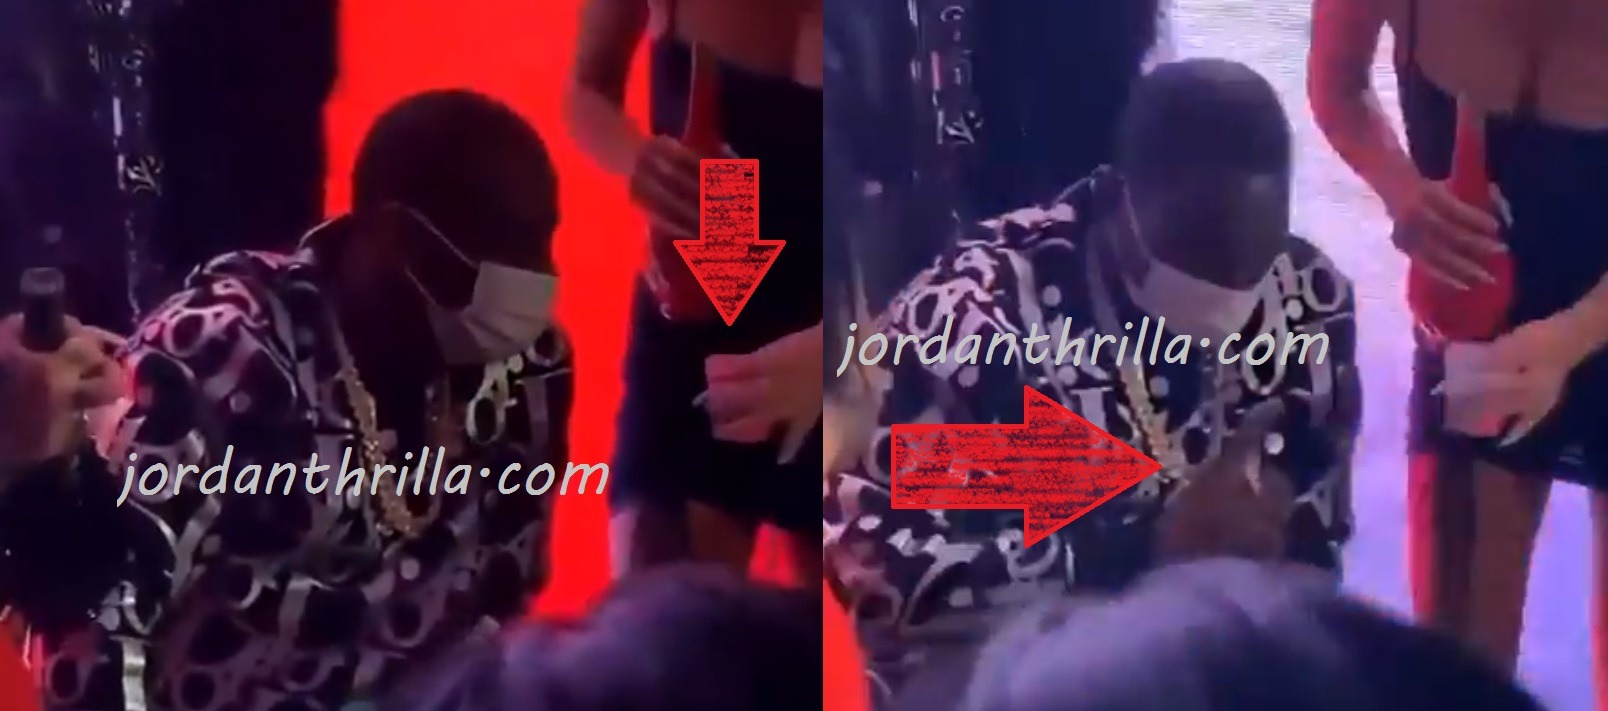 Bobby Shmurda refusing open drink from woman at club. Bobby Shmurda doing Dikembe Mutombo finger wag at club to deny drink. Bobby Shmurda paranoid